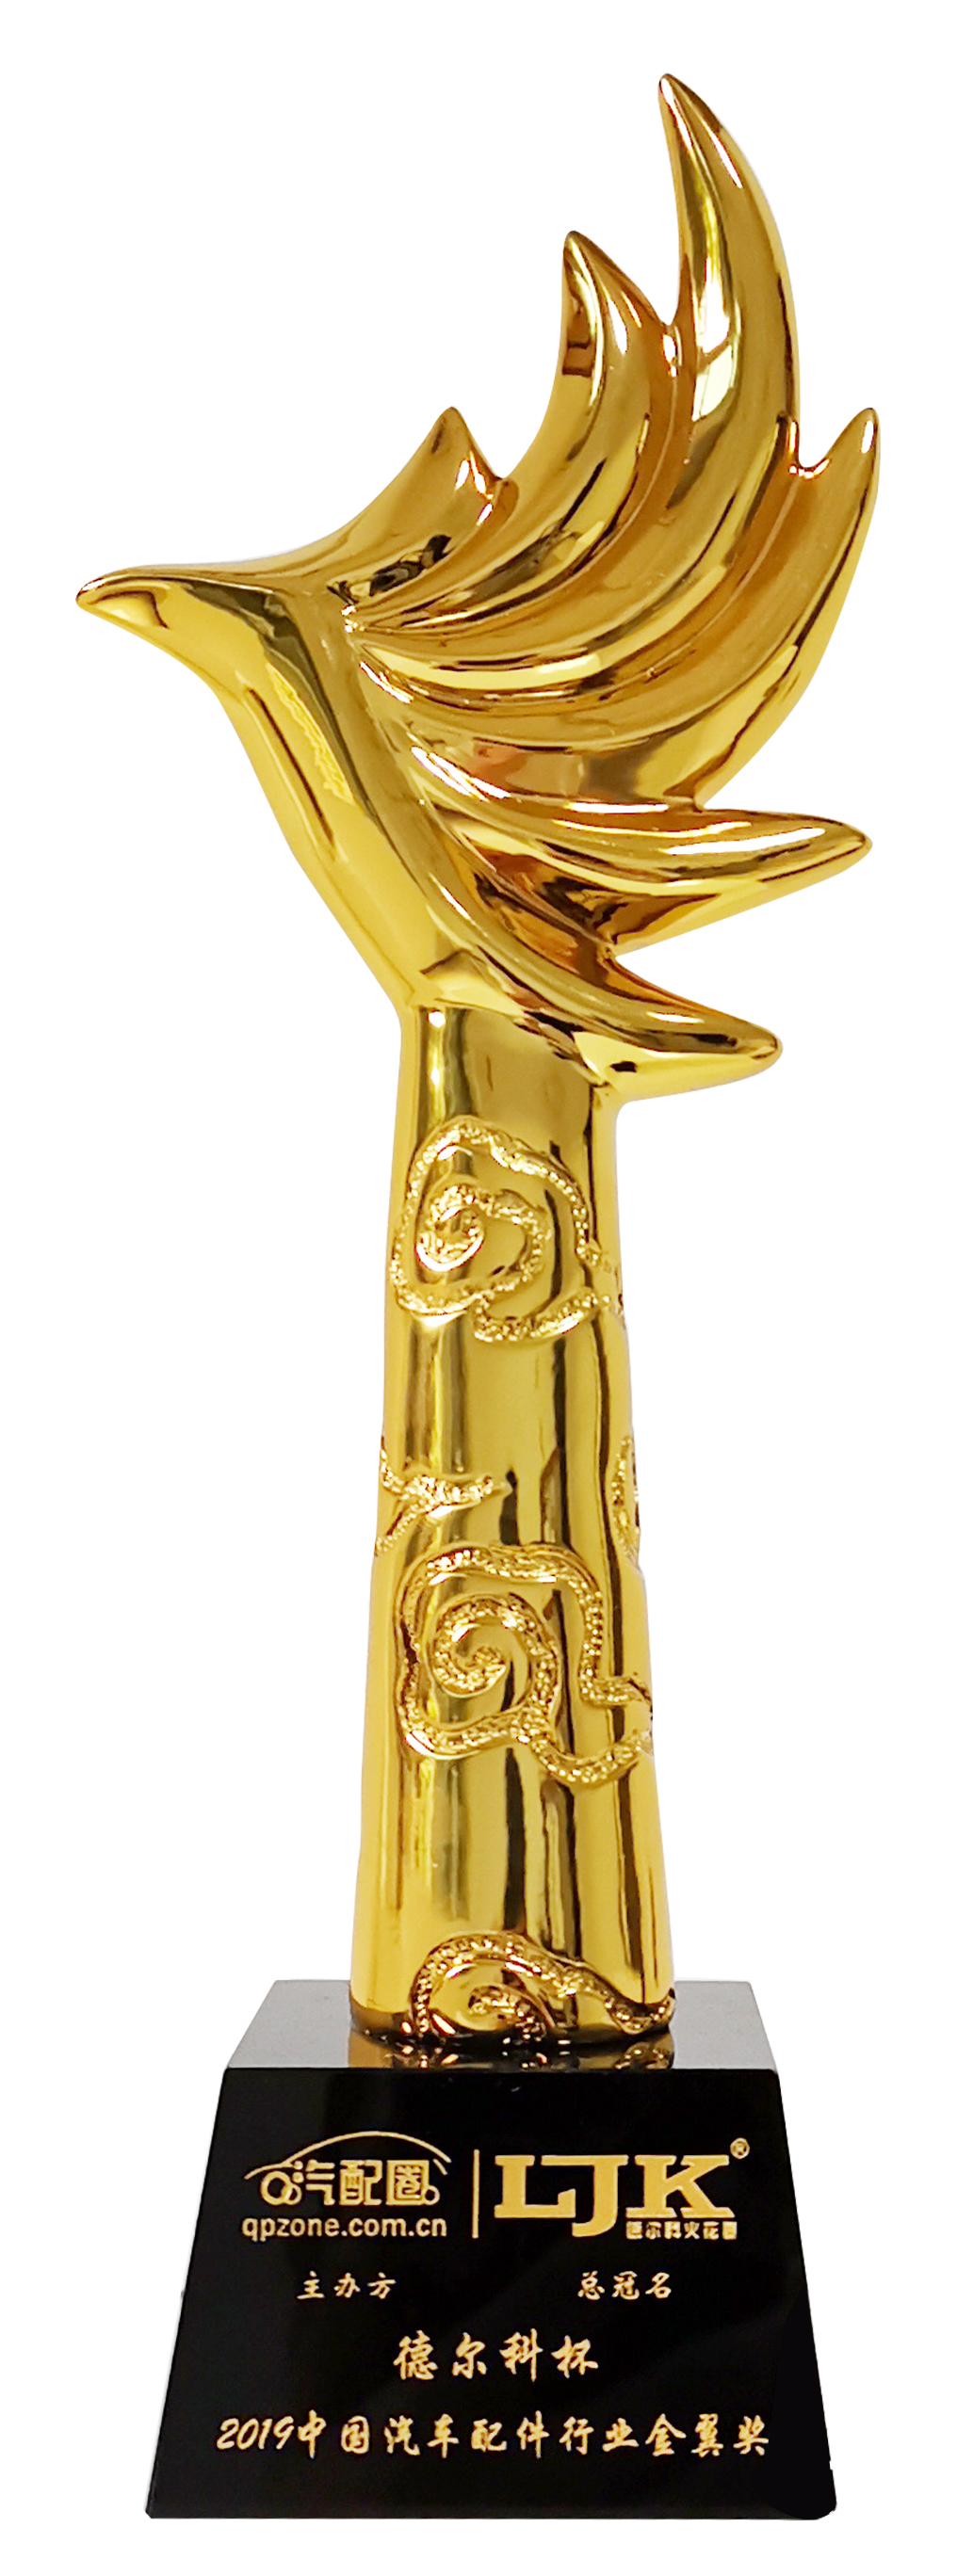 Delco Cup - Golden Wing Award